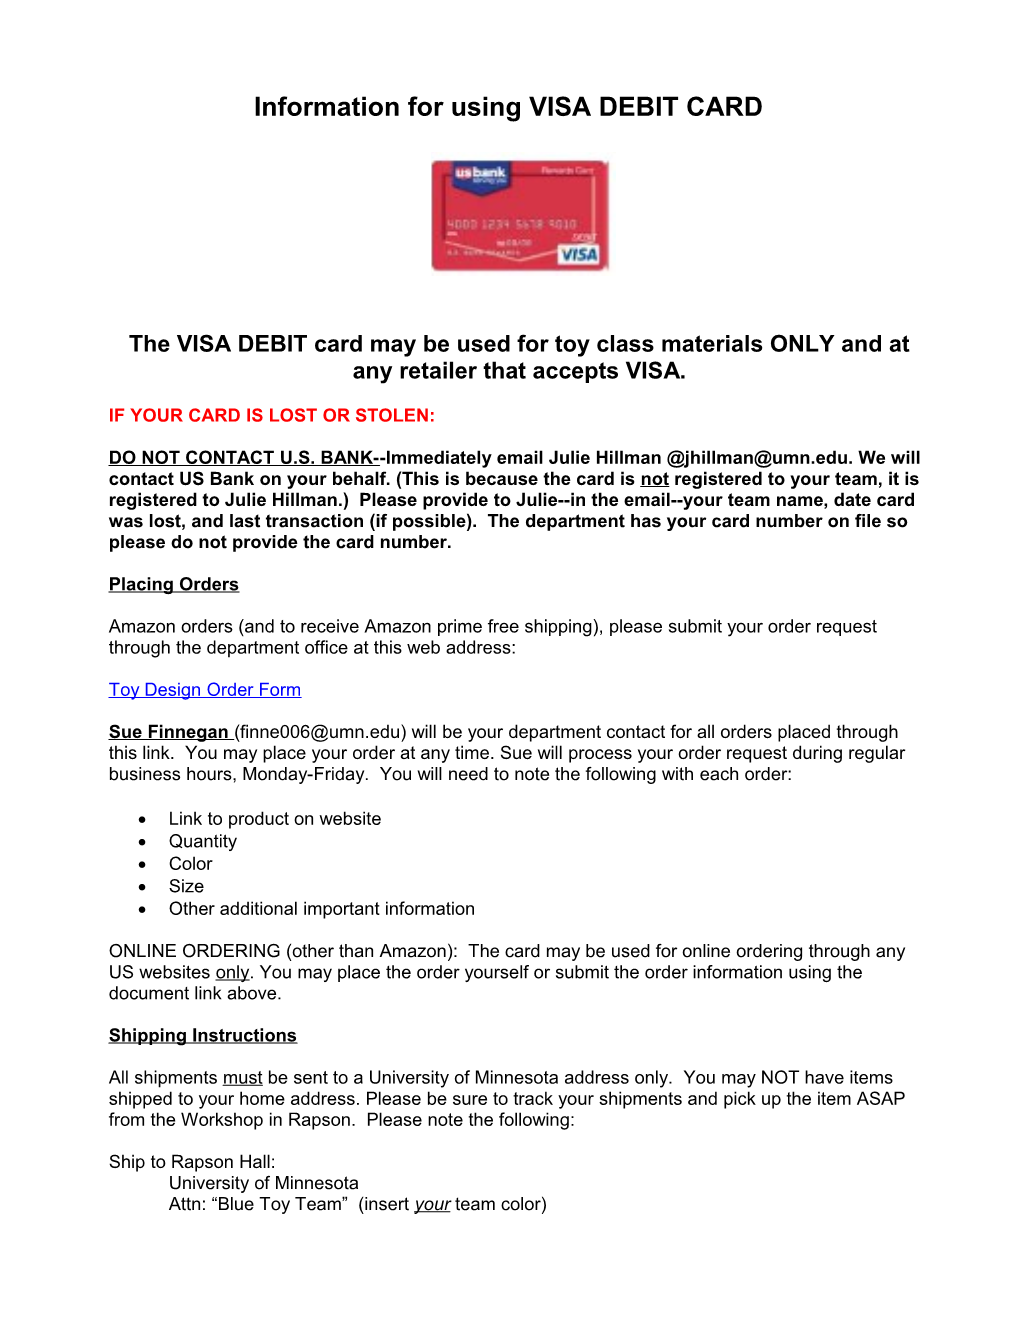 Information for Using VISA DEBIT CARD